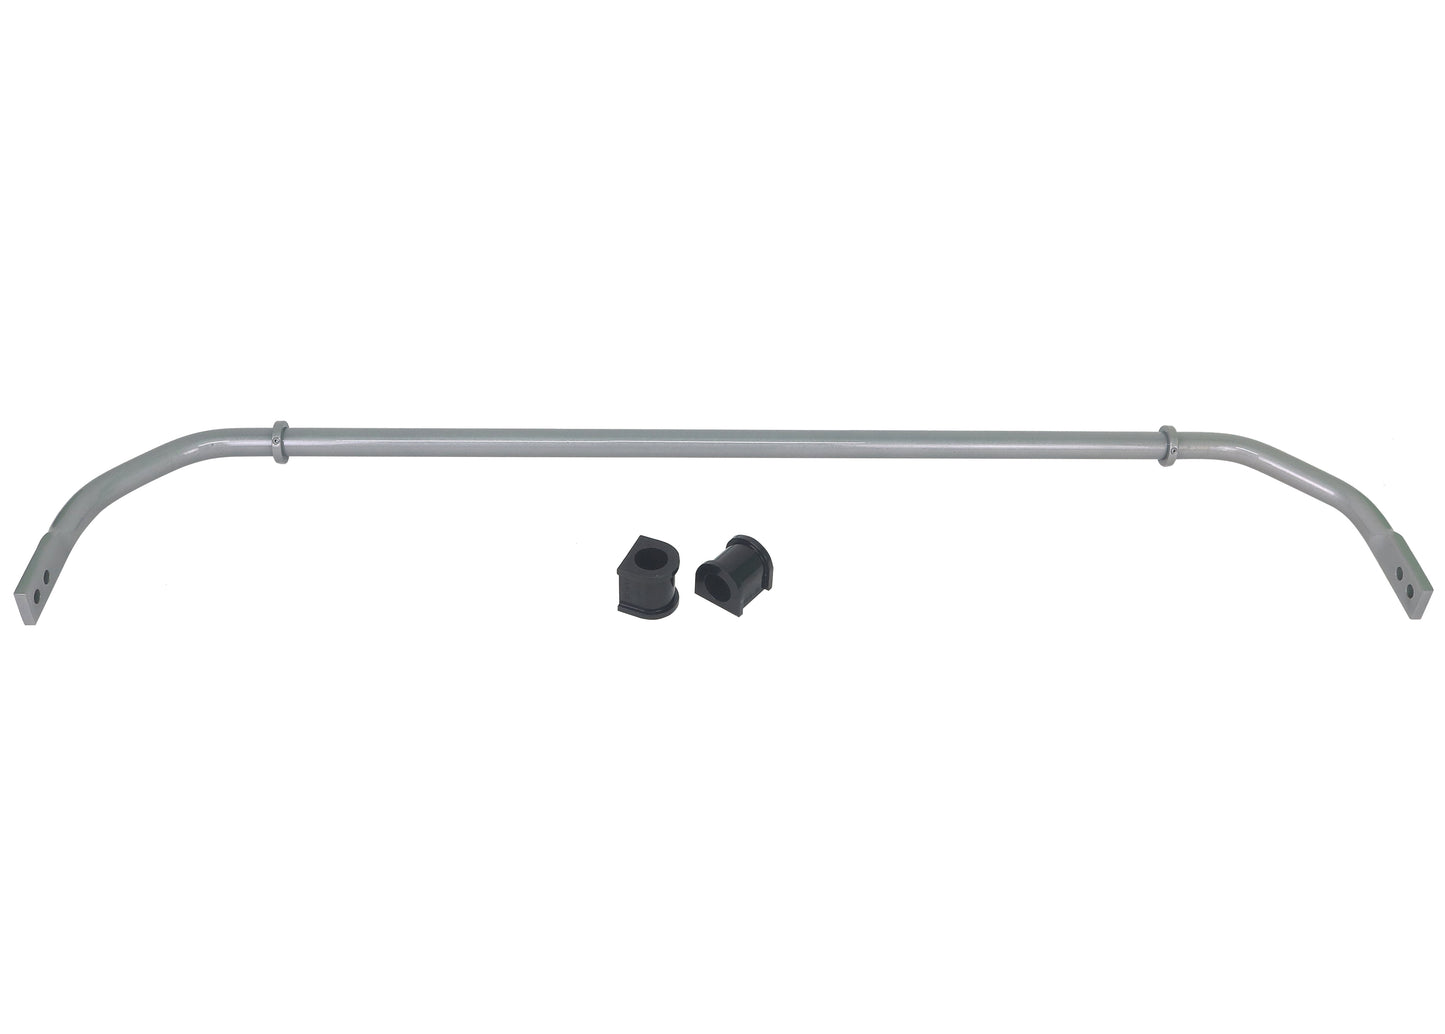 Front Sway bar - 24mm heavy duty blade adjustable